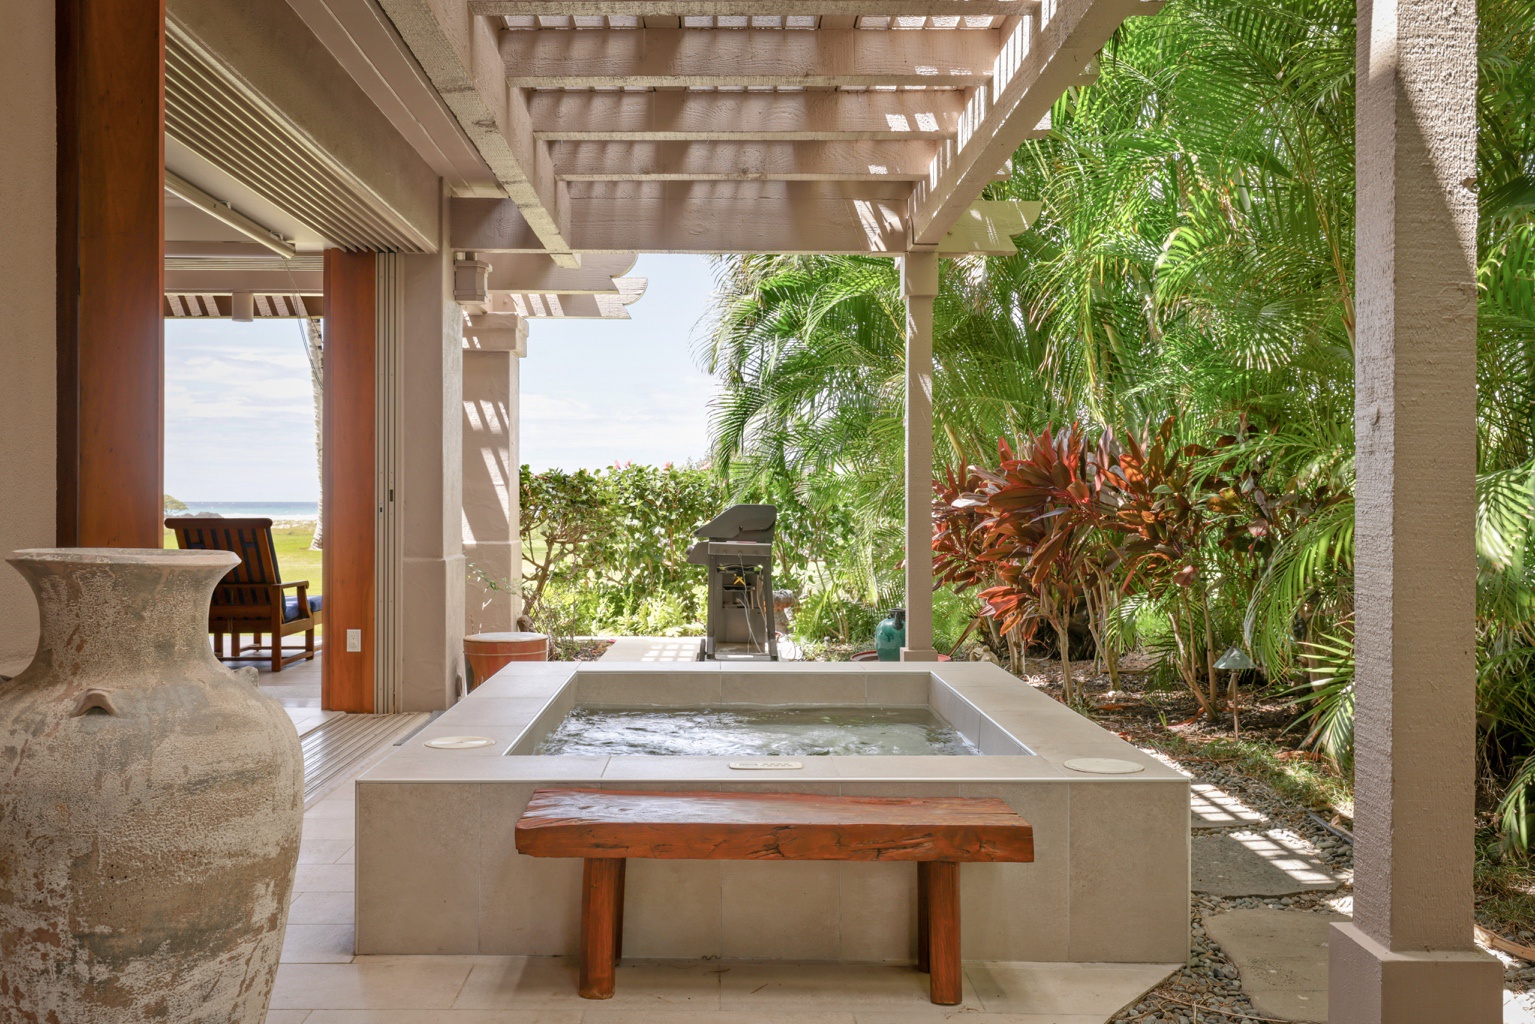 Kailua Kona Vacation Rentals, 3BD Golf Villa (3101) at Four Seasons Resort at Hualalai - Relax in the outdoor spa with garden views.